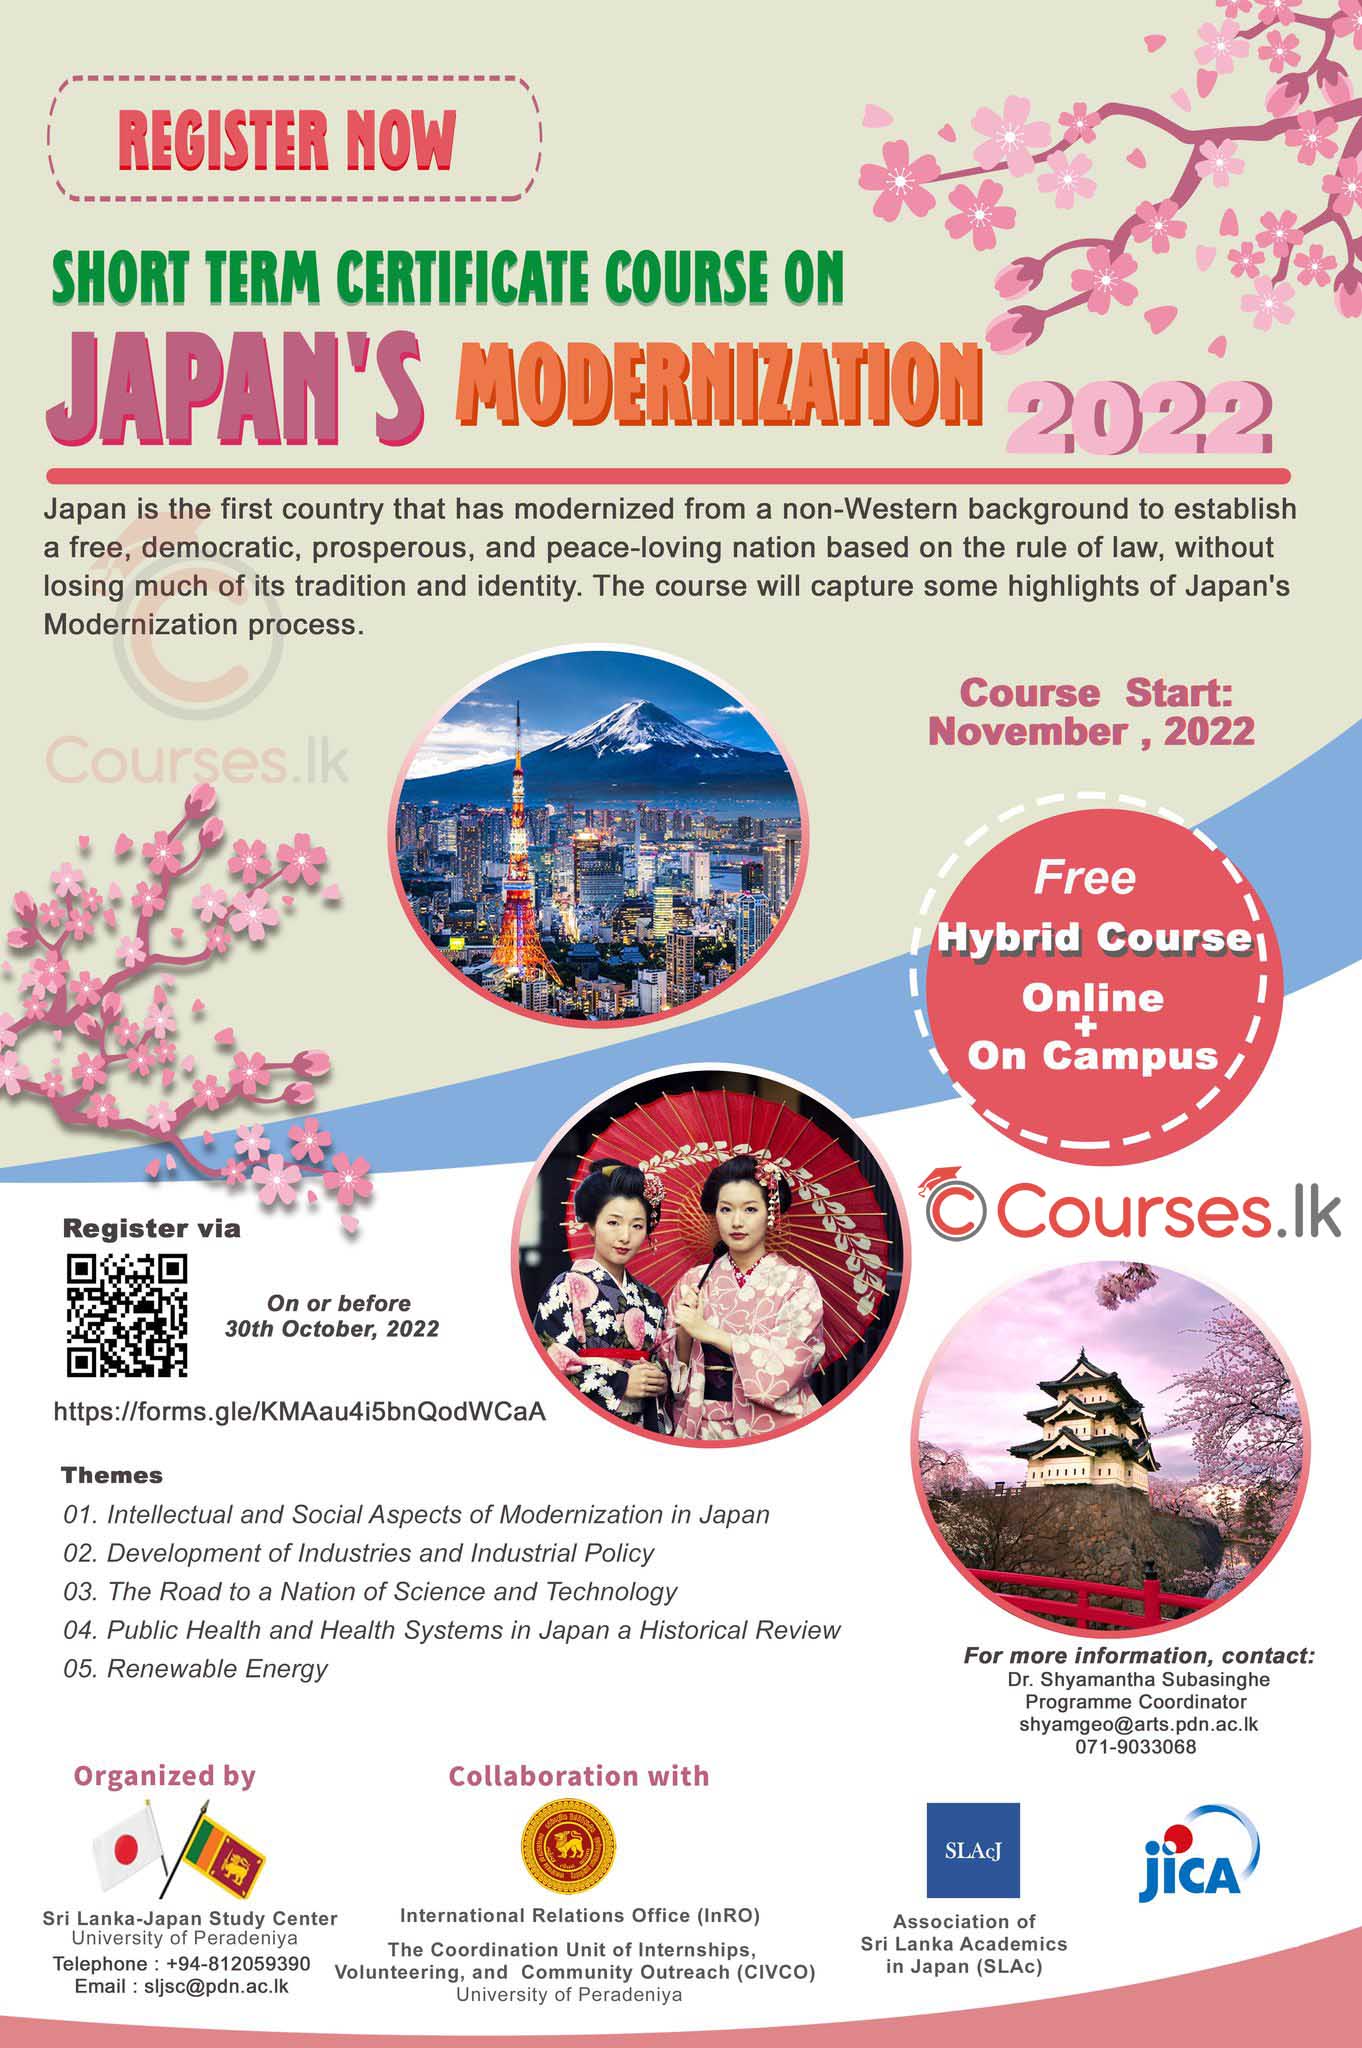 Short-Term Certificate Course on Japan's Modernization 2022 - University of Peradeniya